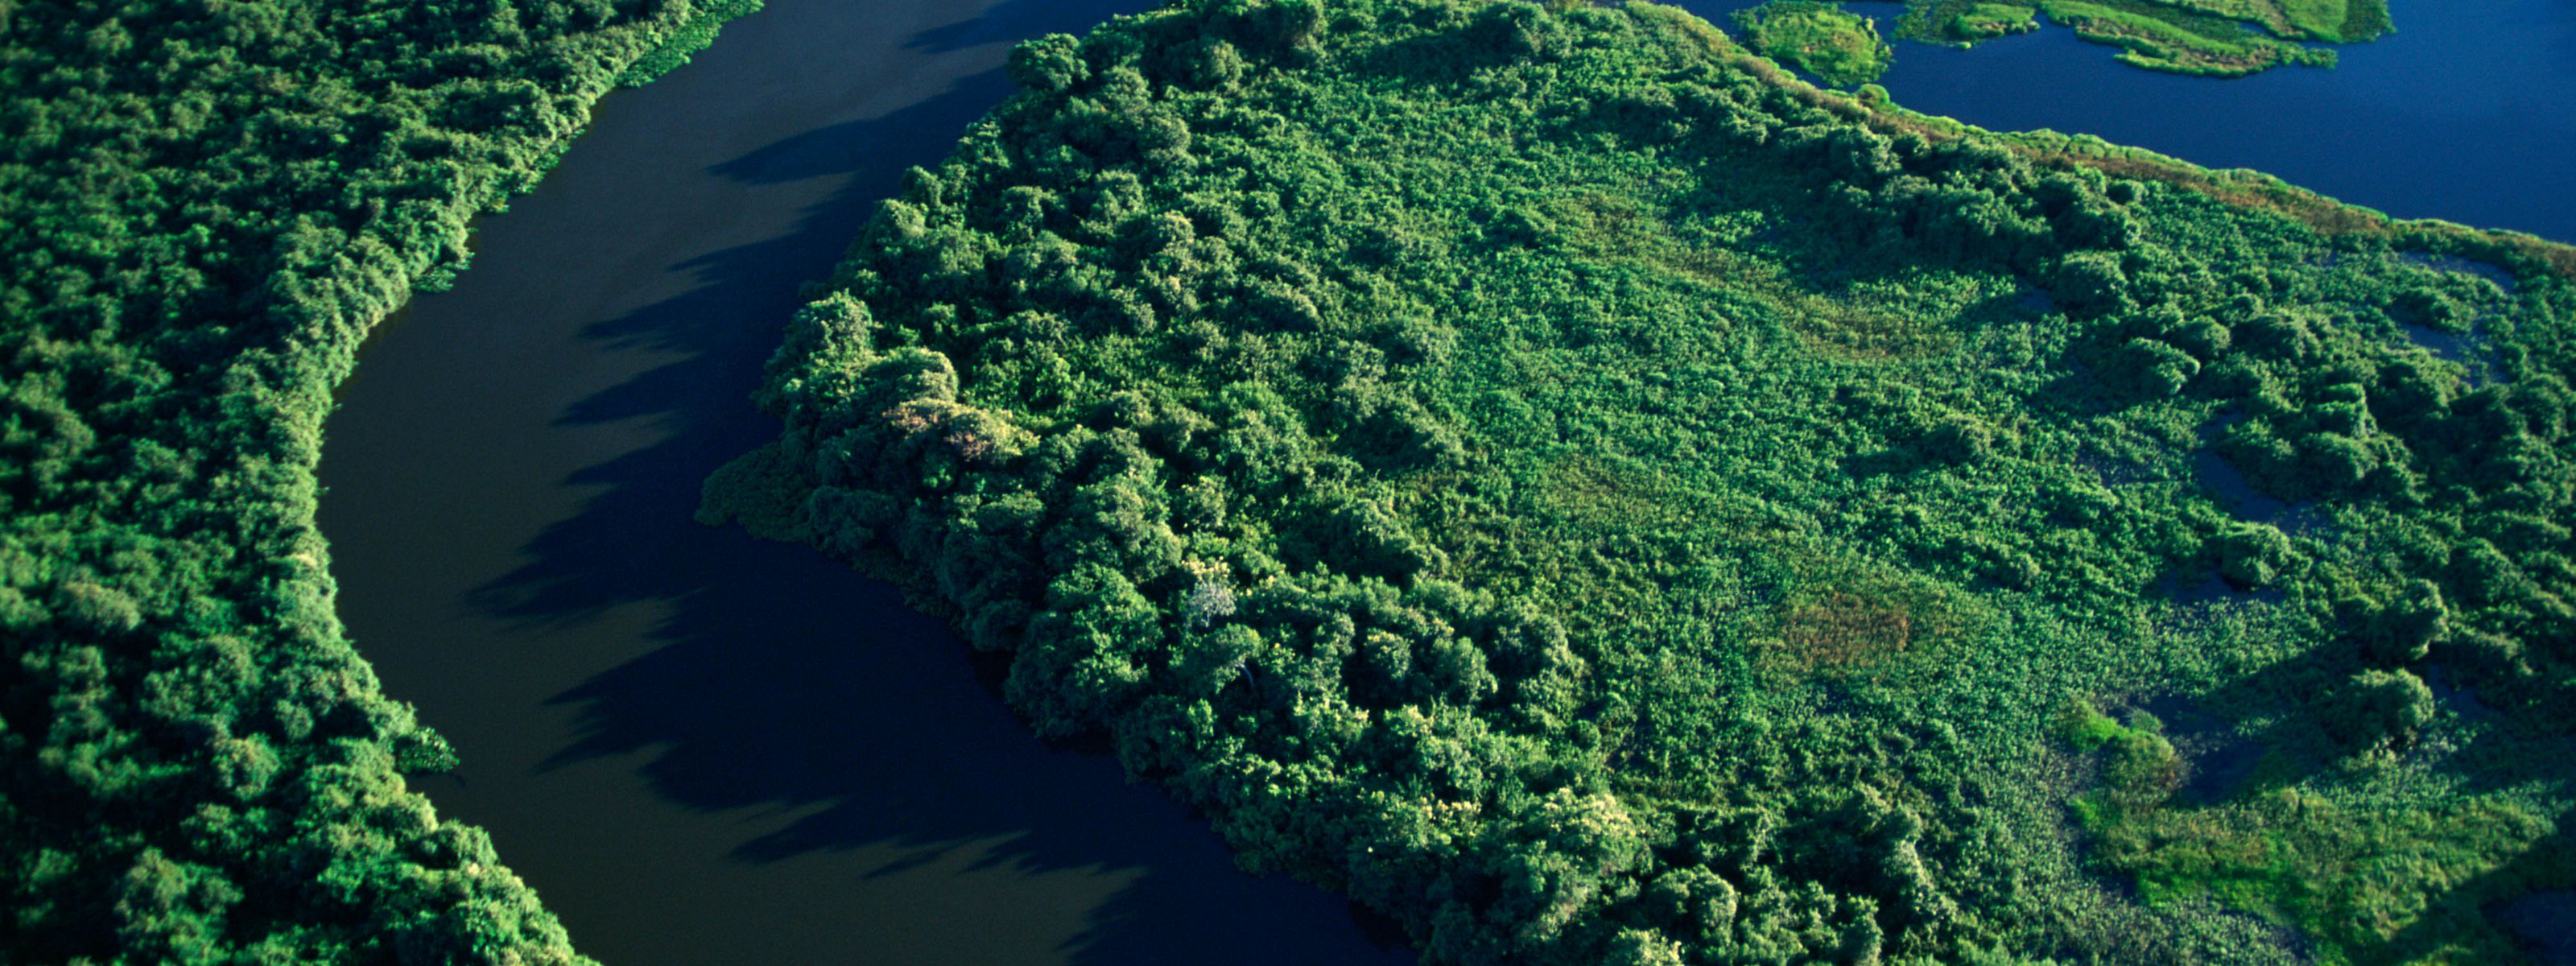  Pantanal National Park in Brazil.